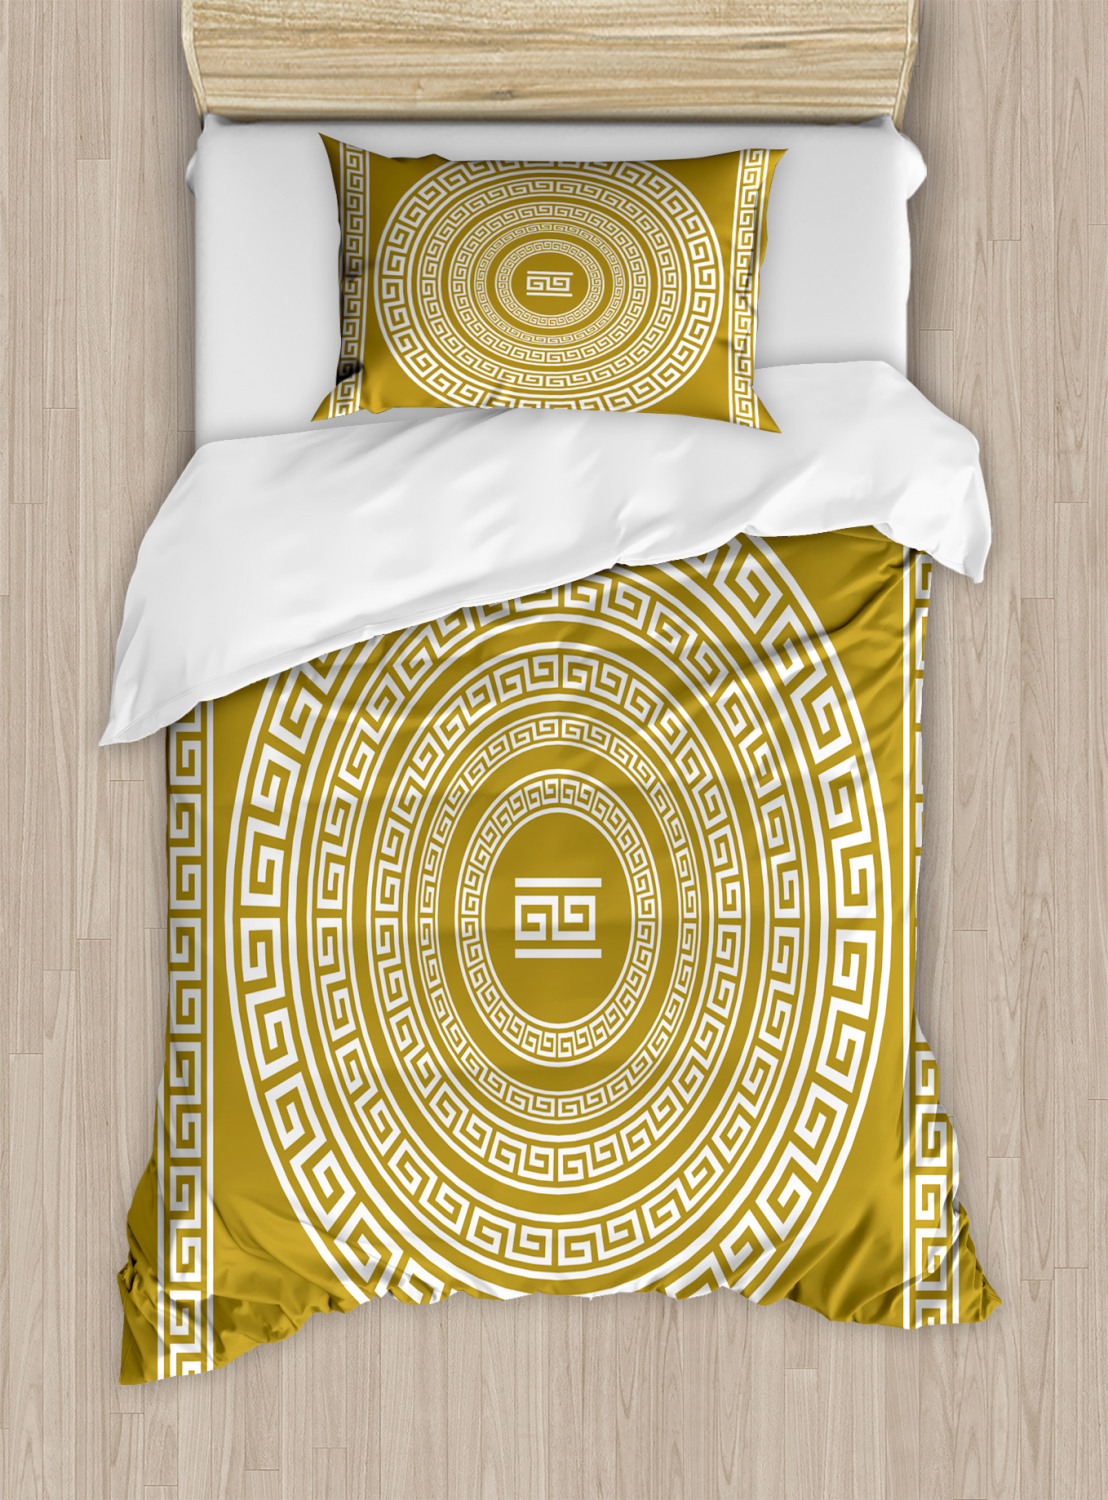 Greek Key Duvet Cover Set with Pillow Shams Frieze Meander Lines Print  eBay